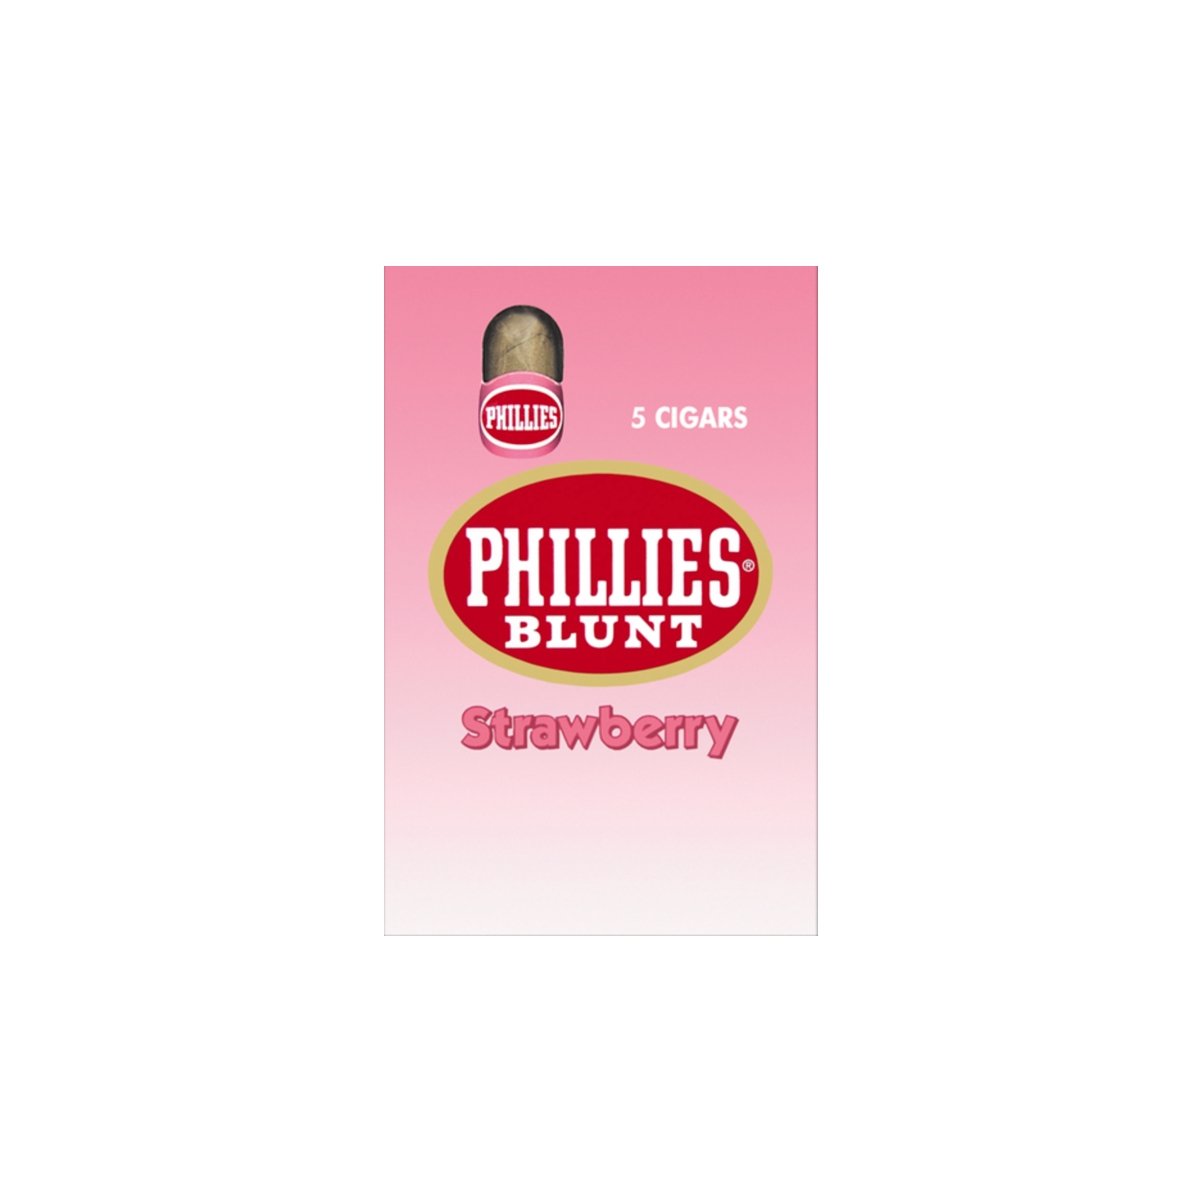 Phillies Blunt Strawberry